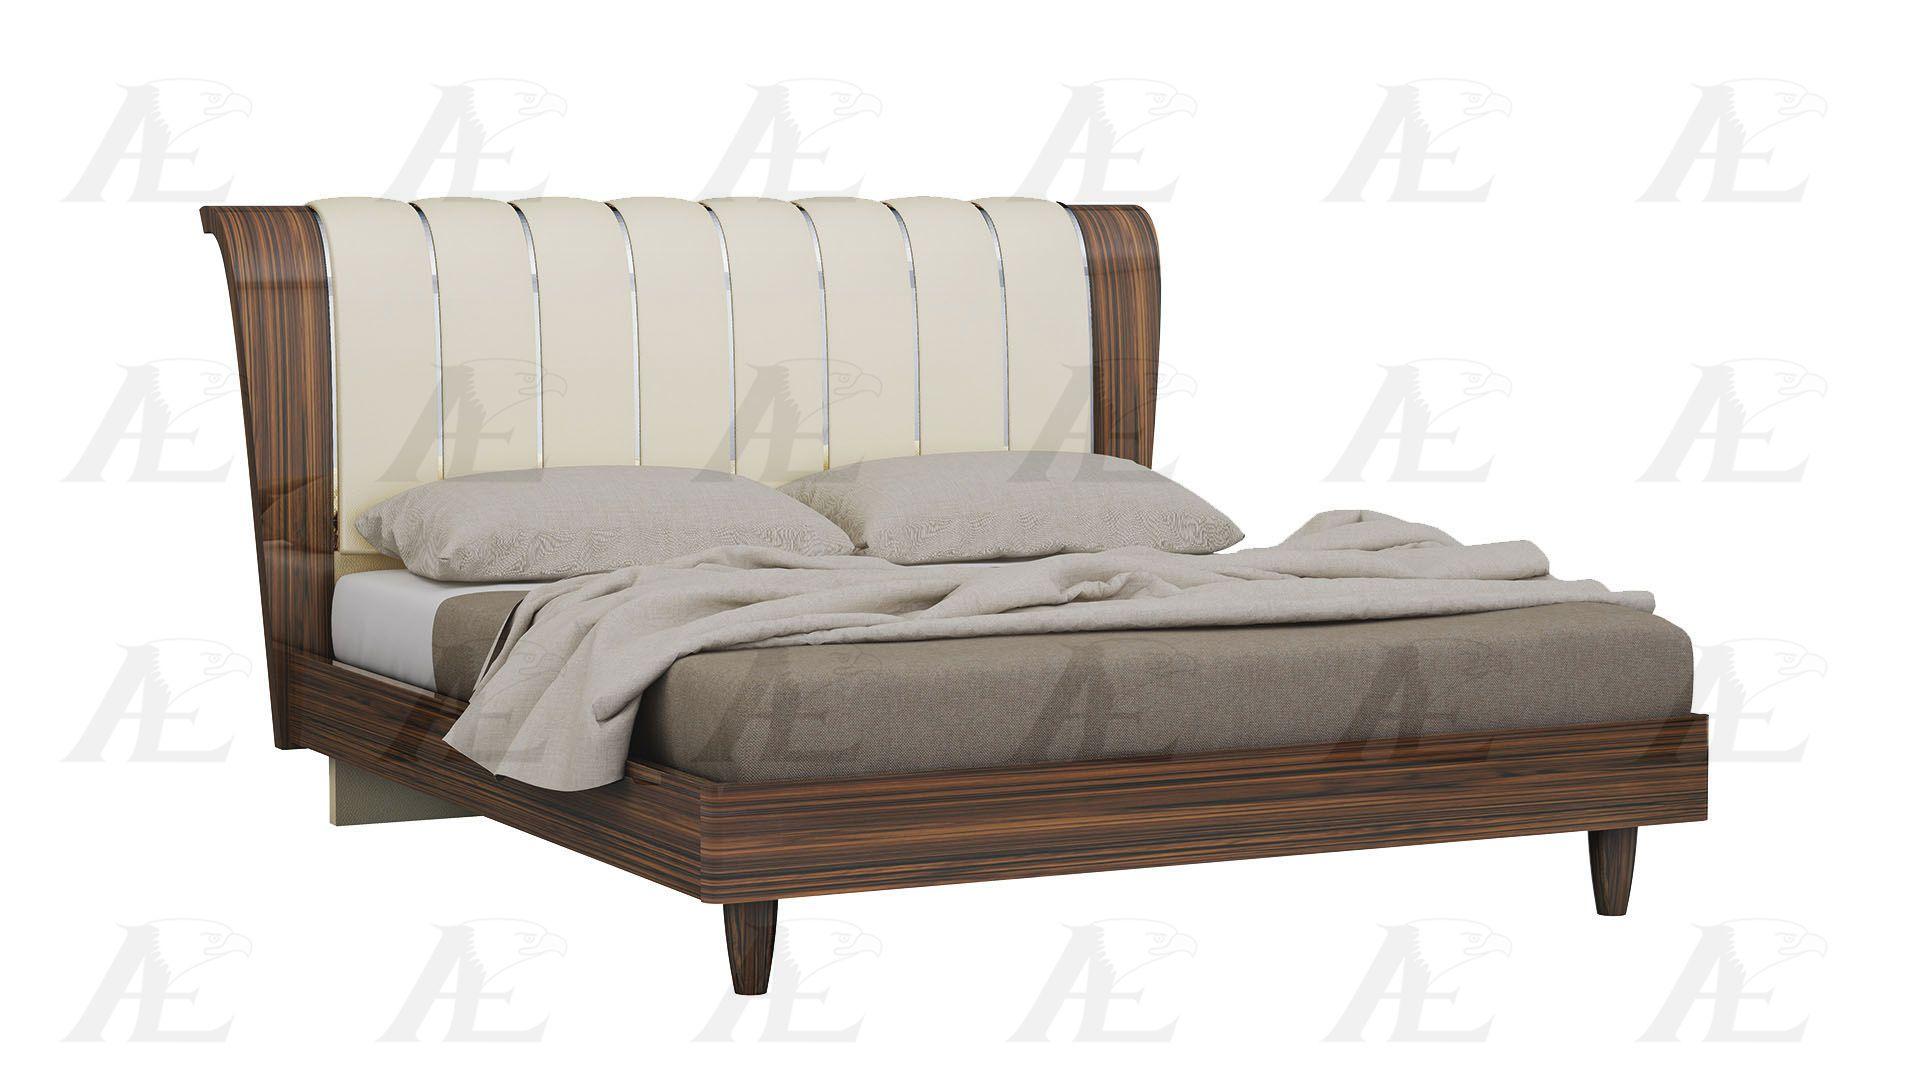 

    
American Eagle Furniture P101-BED-EK Ivory Brown Rosewood Eastern King Size Bedroom Set Lacquer finish 7Pcs
